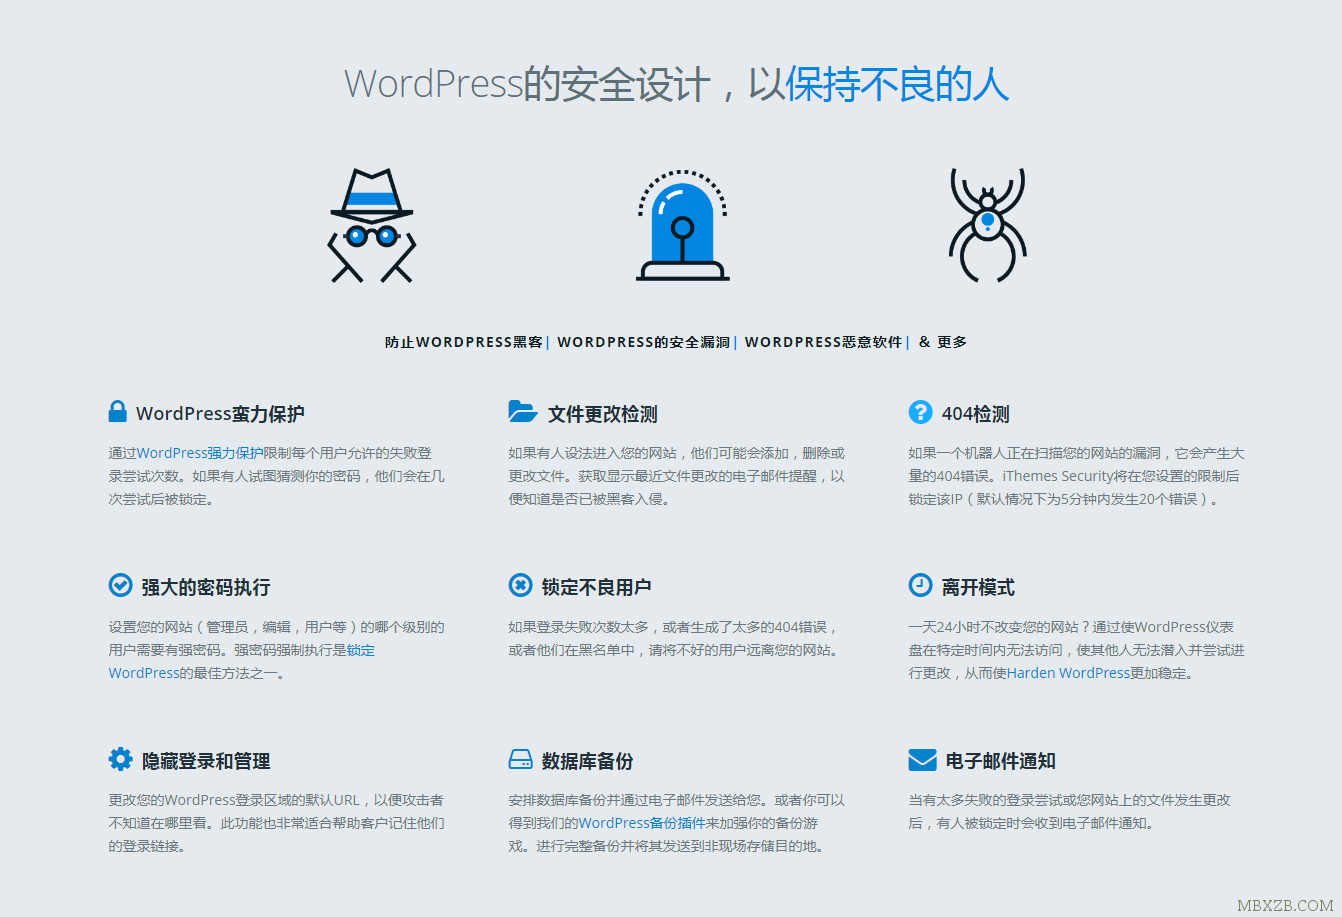 WordPress 最强安全防护插件iThemes Security Pro v5.3.4汉化版